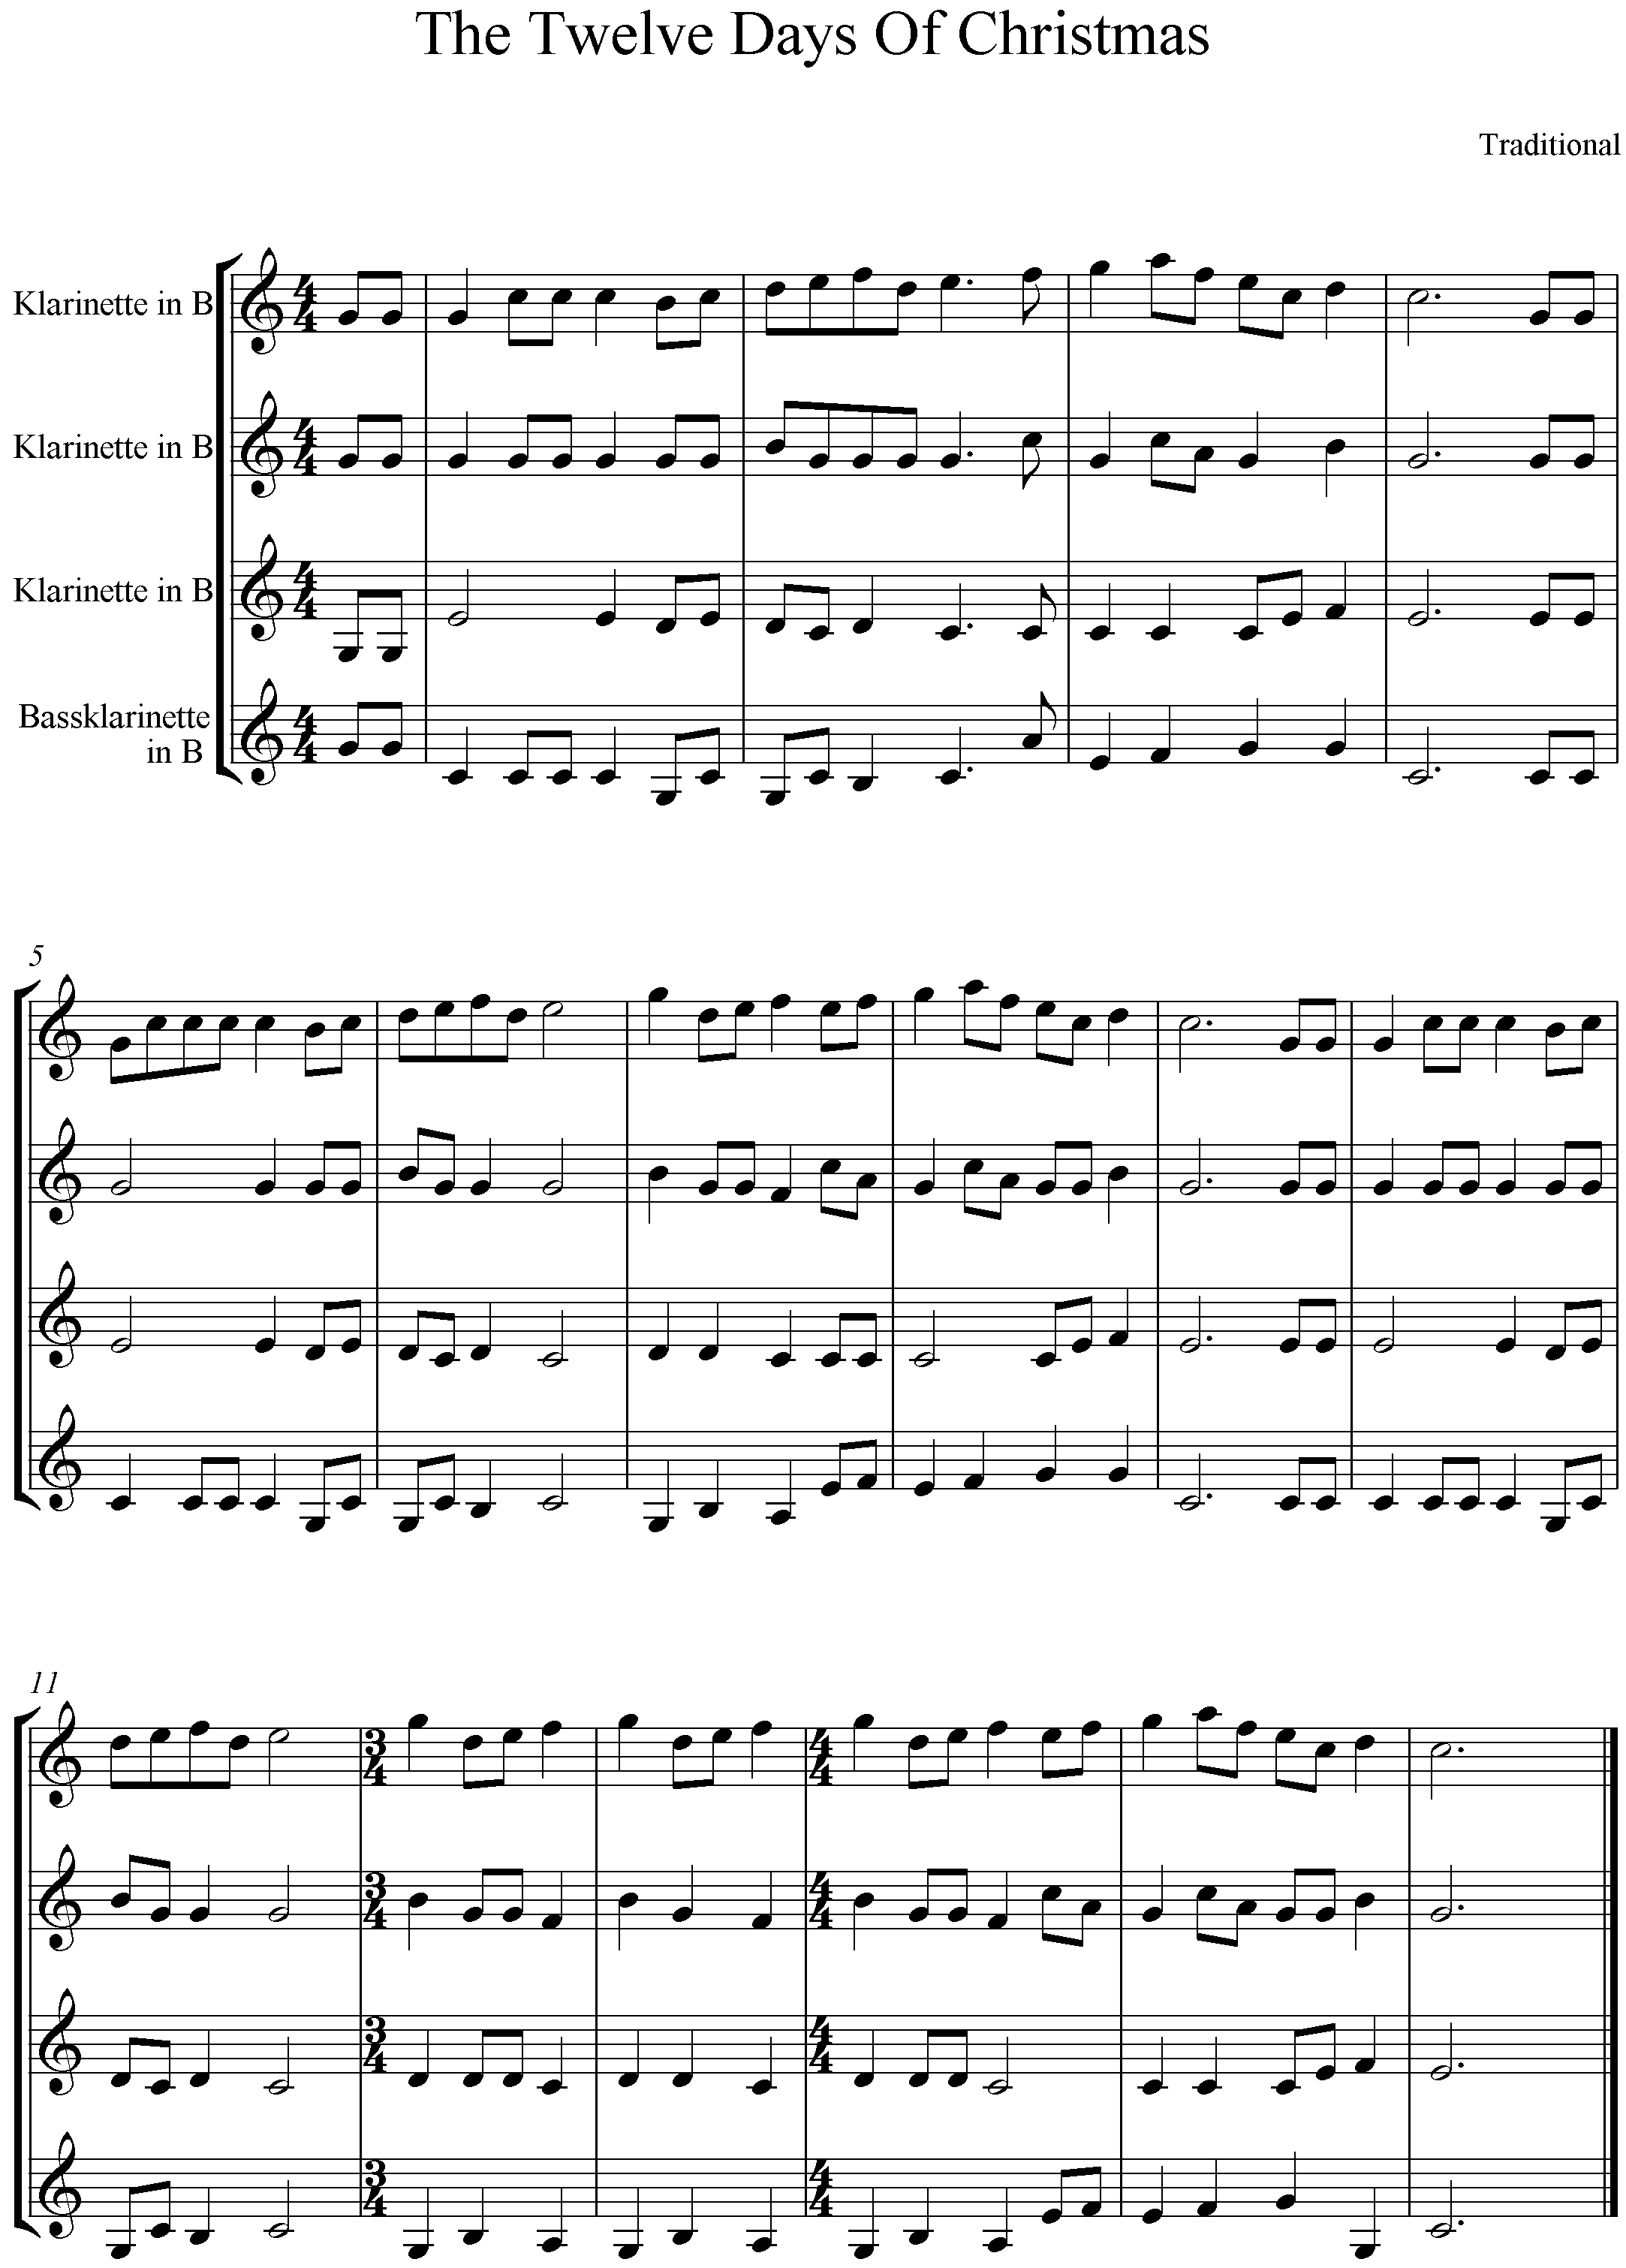 Noten, Klarinettenquartett, Clarinet, C-Major, The Twelve Days Of Christmas